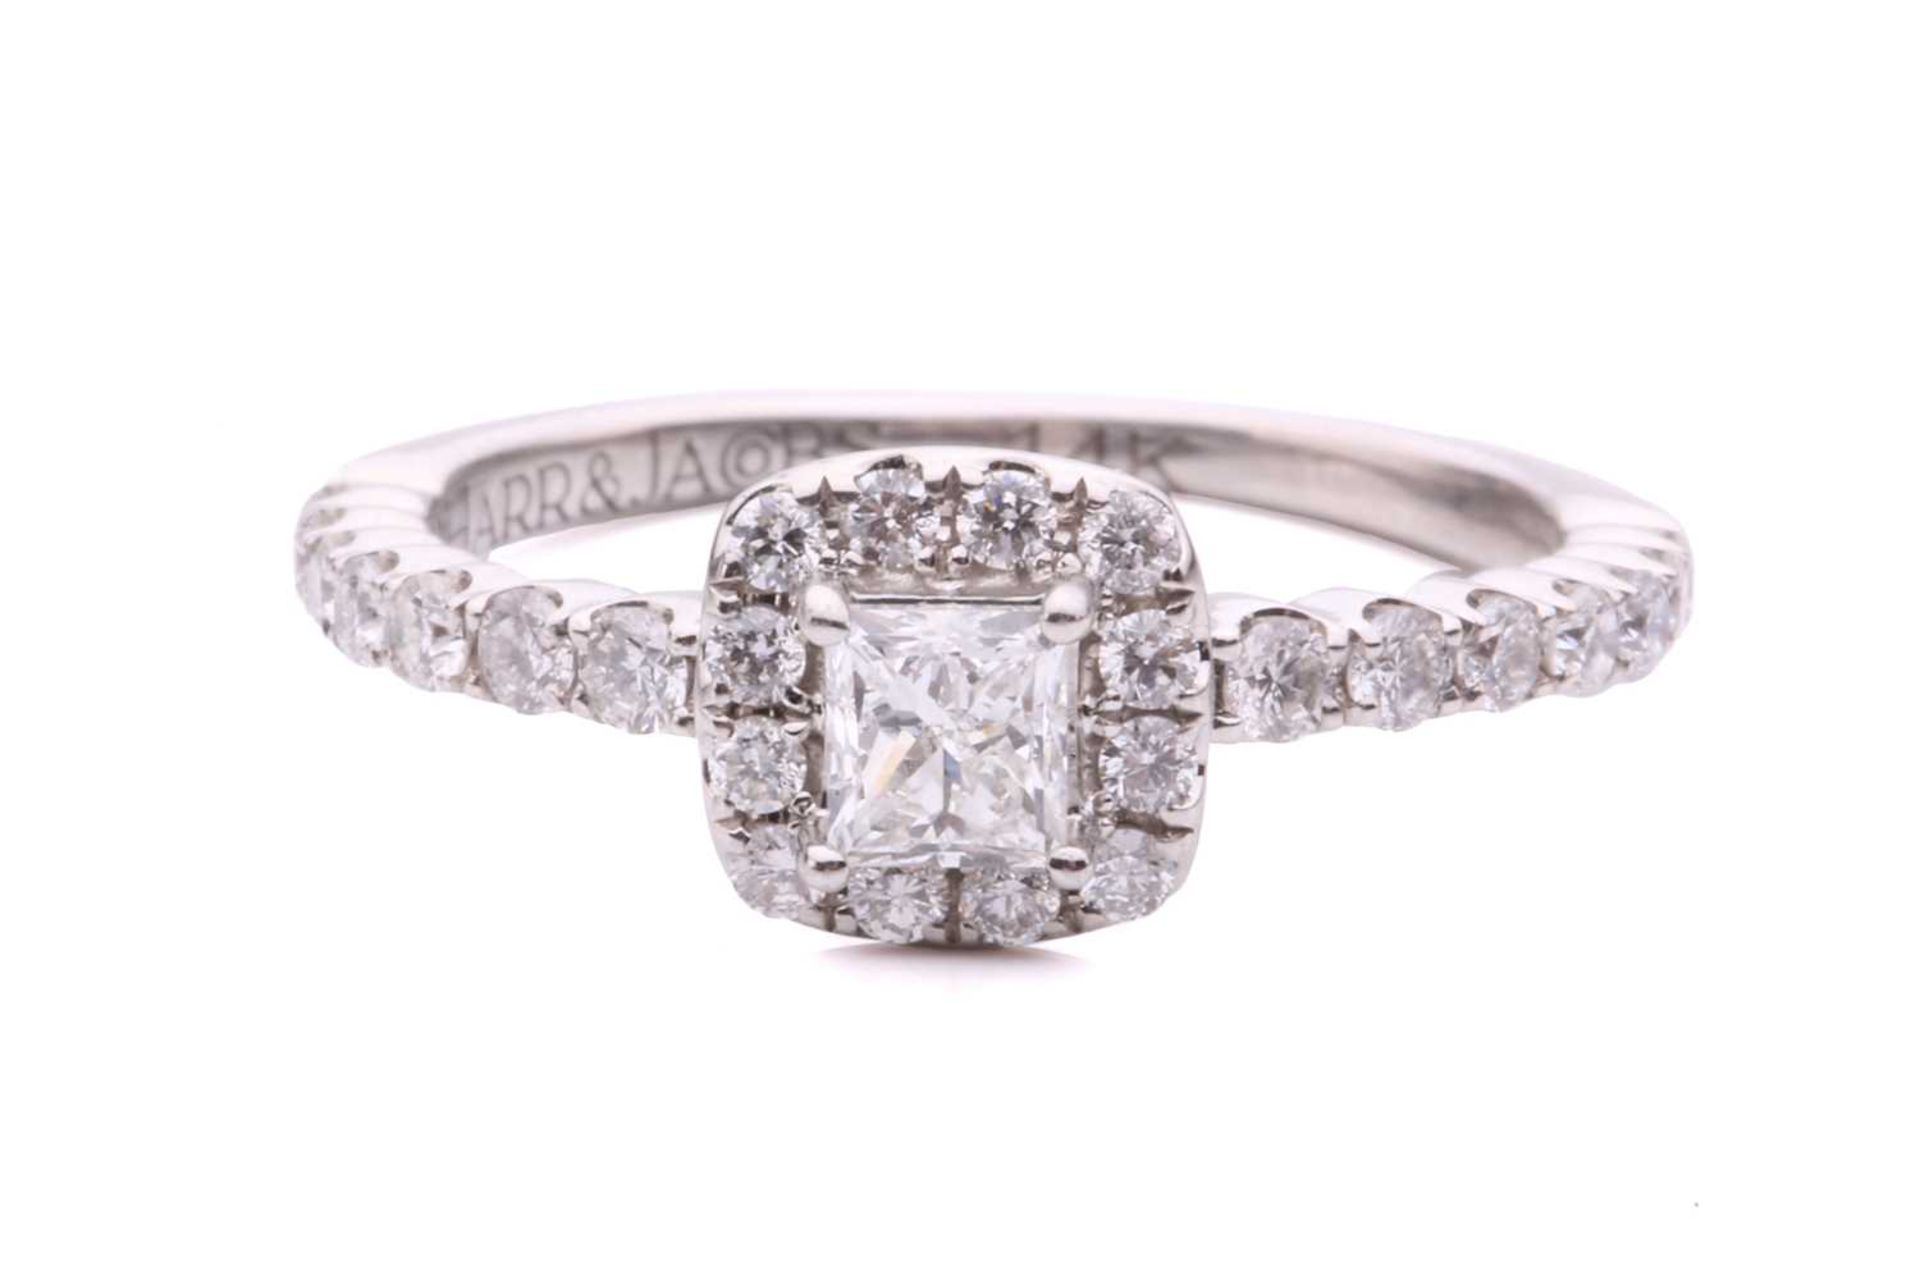 A princess-cut diamond halo ring, with a central claw set princess-cut diamond measuring 3.6x3.3mm